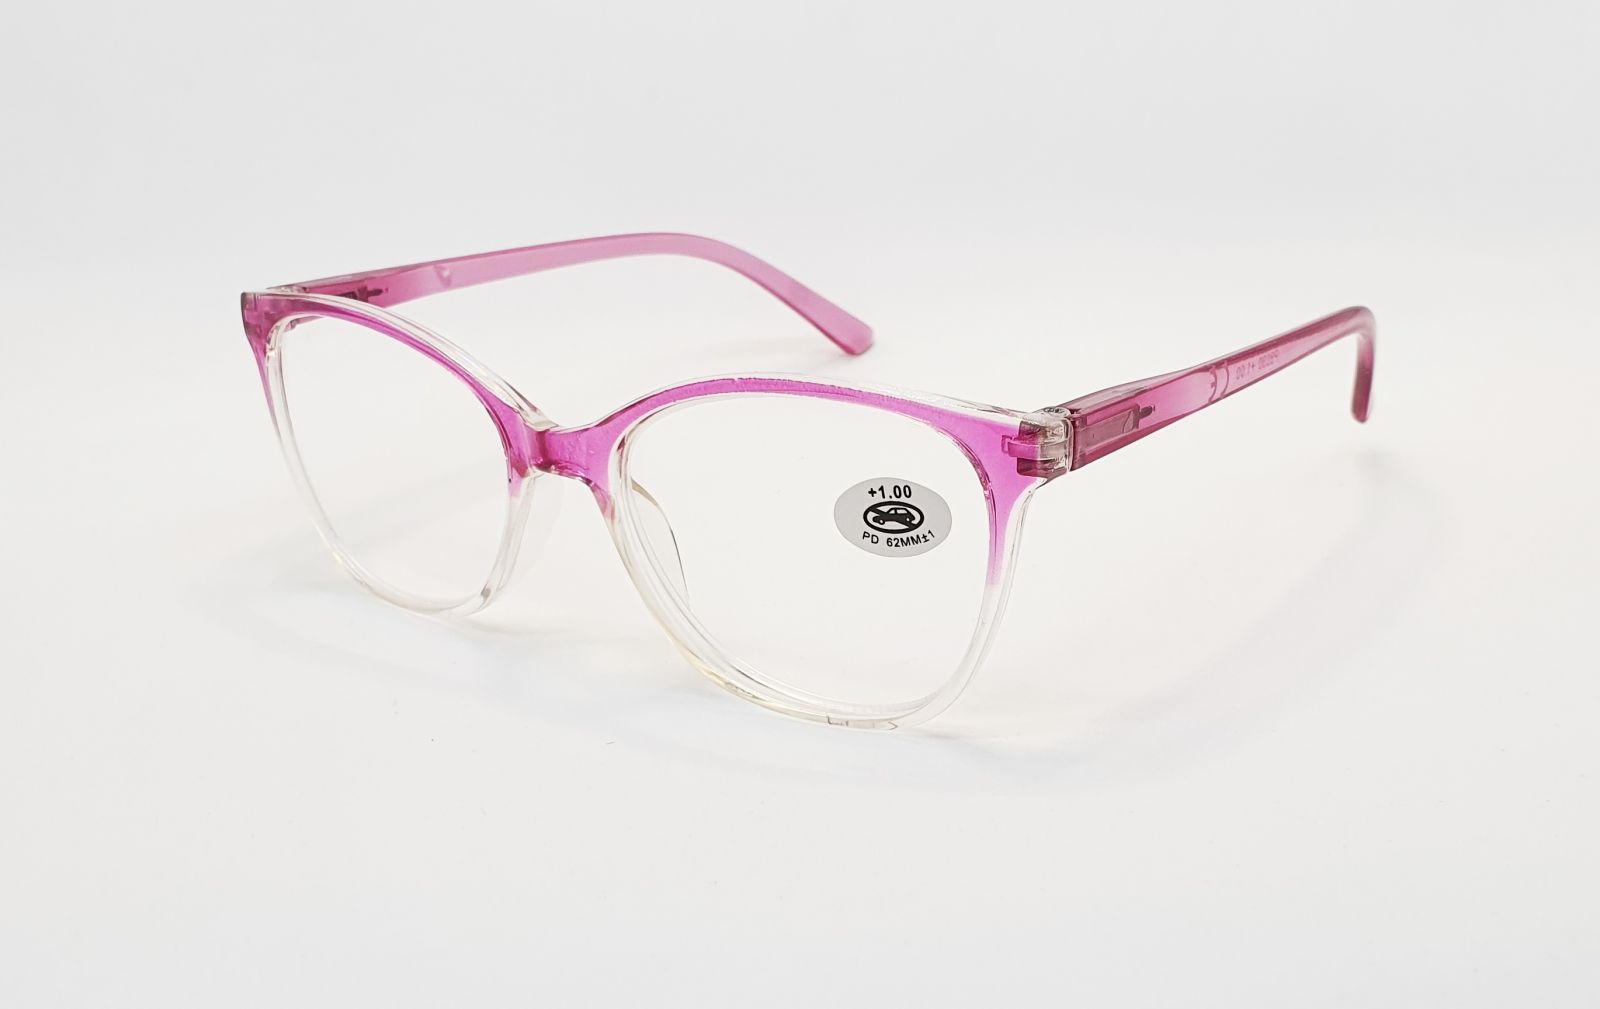 Dioptrické brýle P8030 +2,50 pink flex